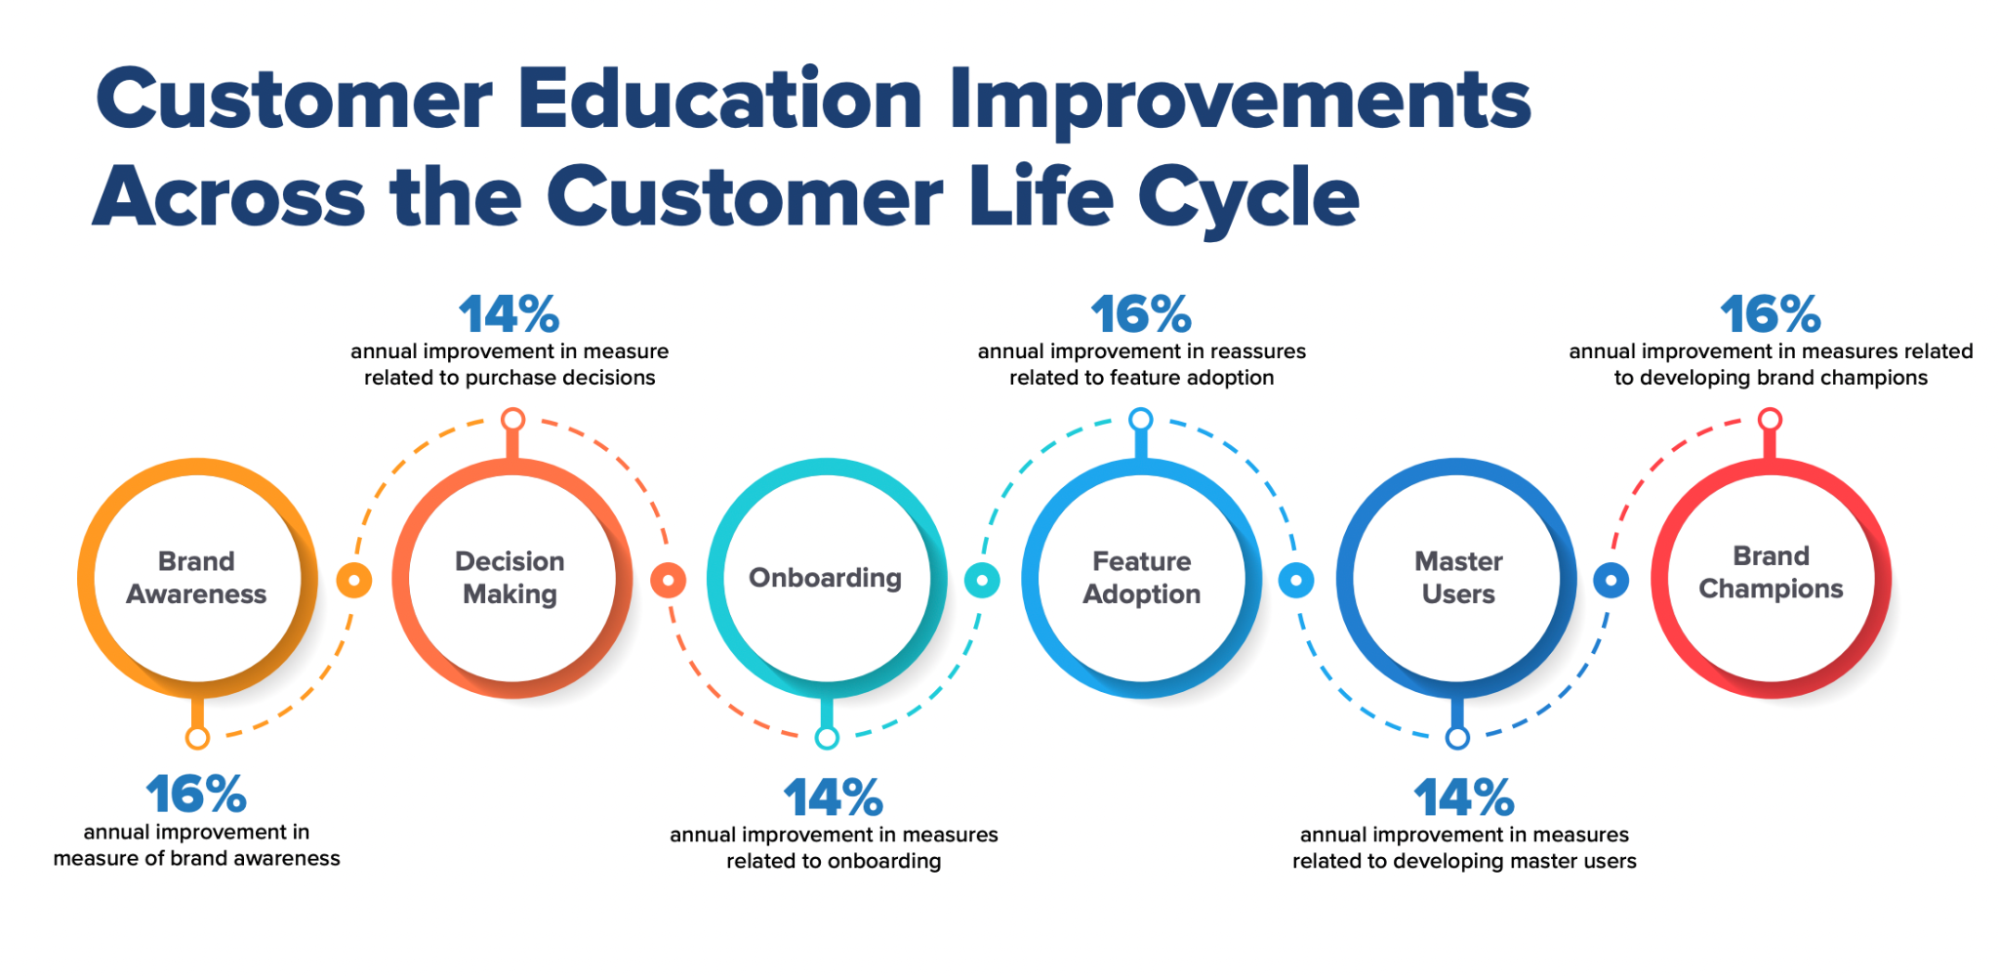 Customer education improvements across the customer lifecycle